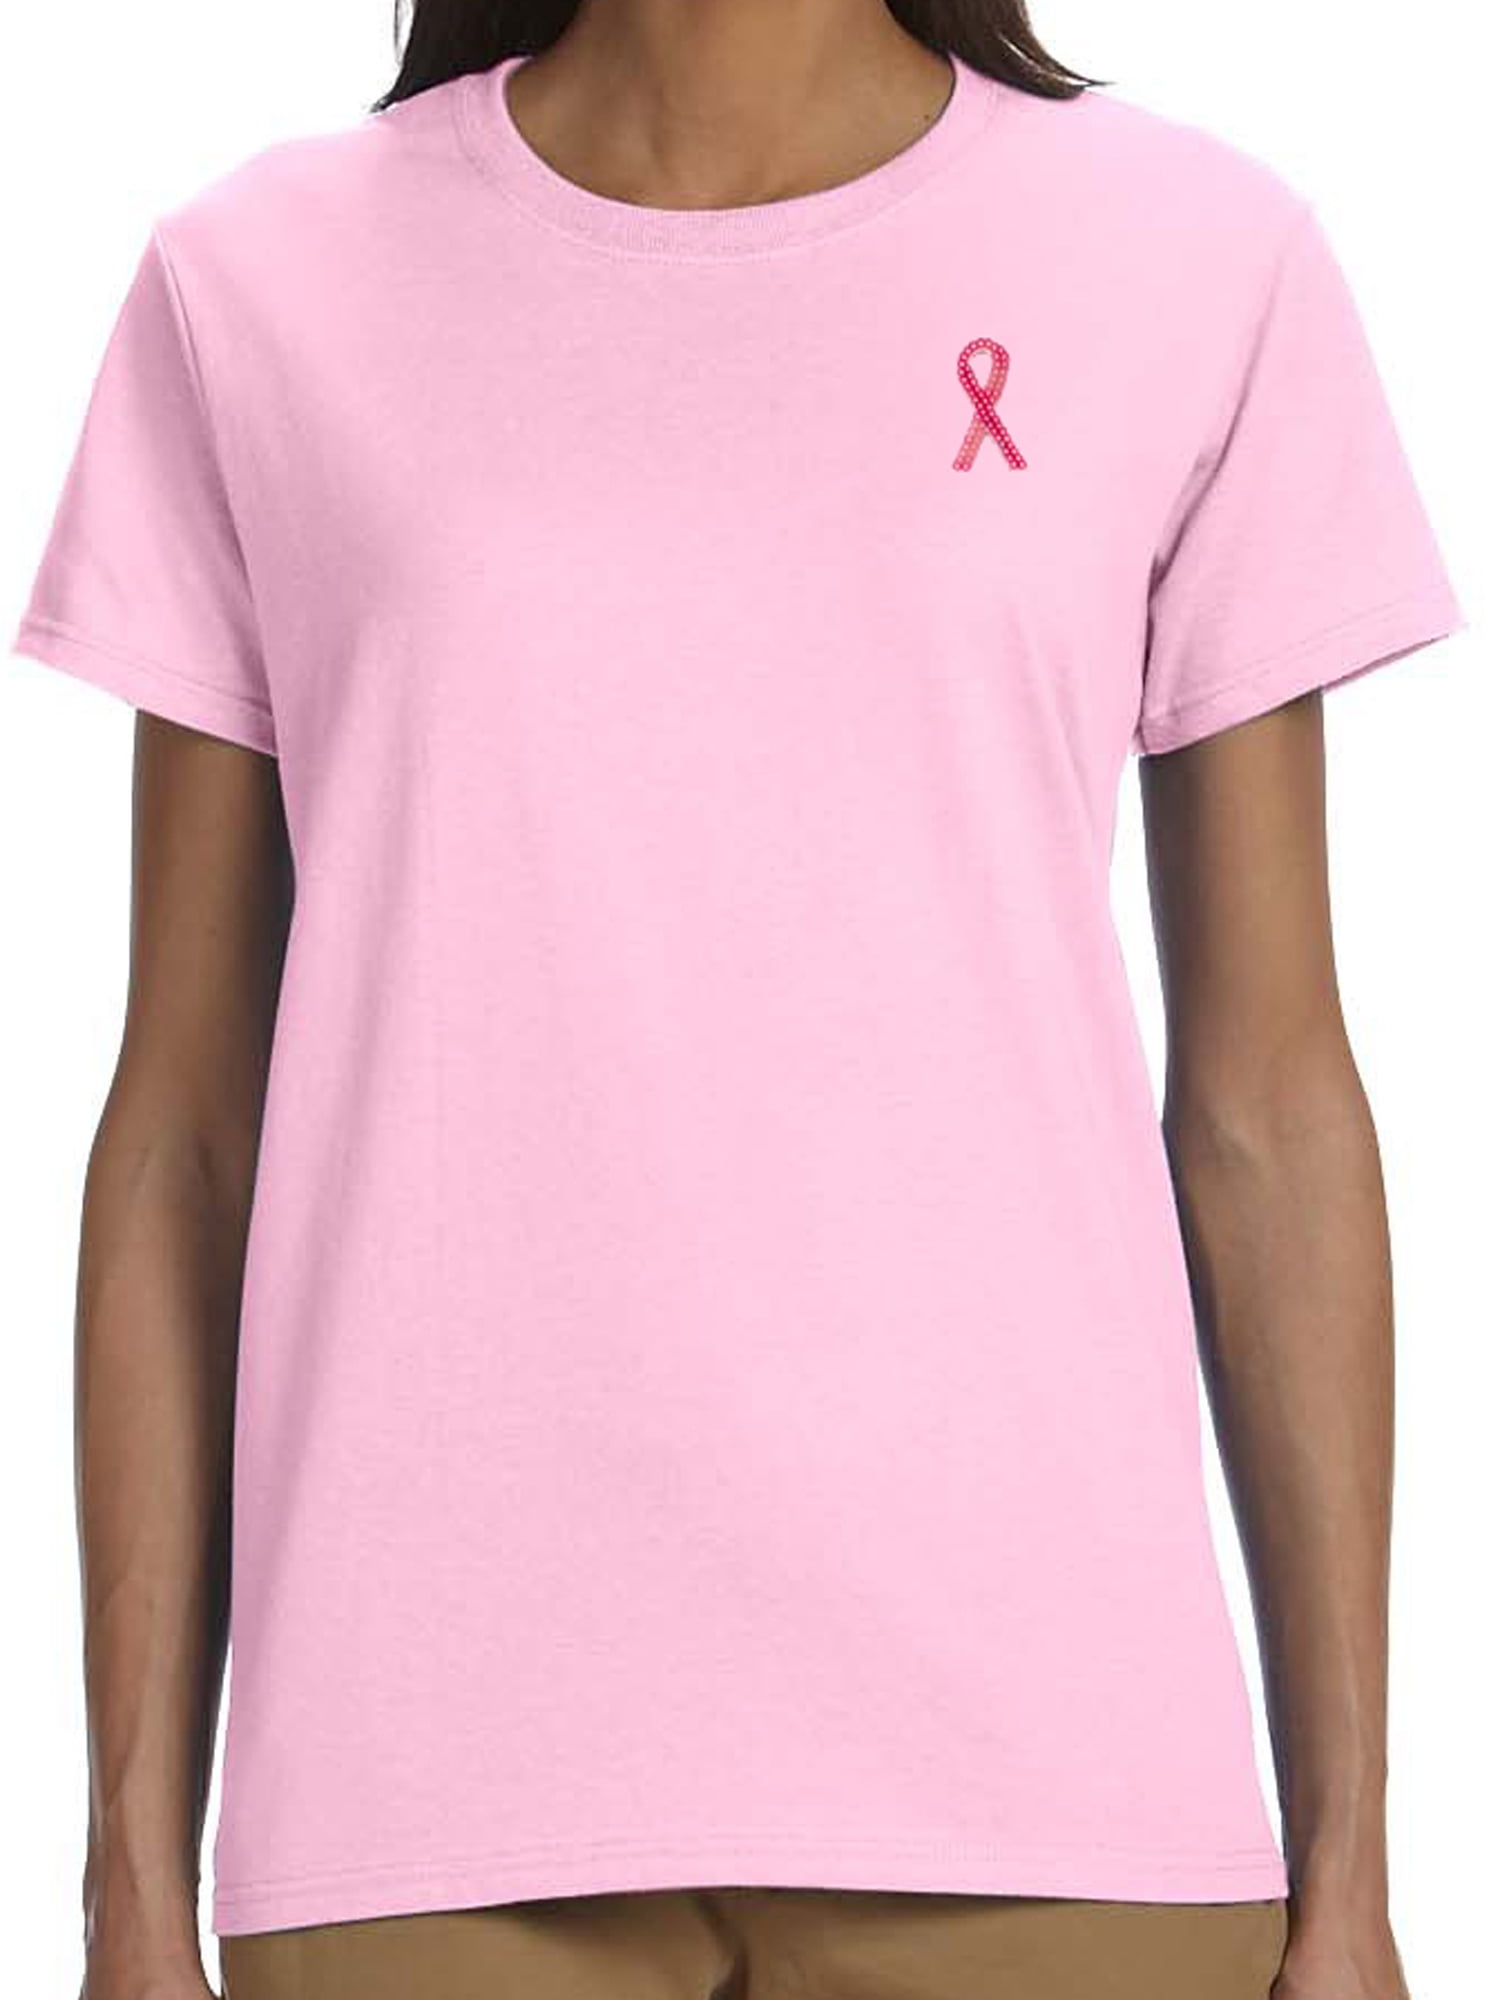 Hope Breast Cancer Ribbon Non-Glitter Short Sleeve Shirt Breast Cancer Awareness Shirt